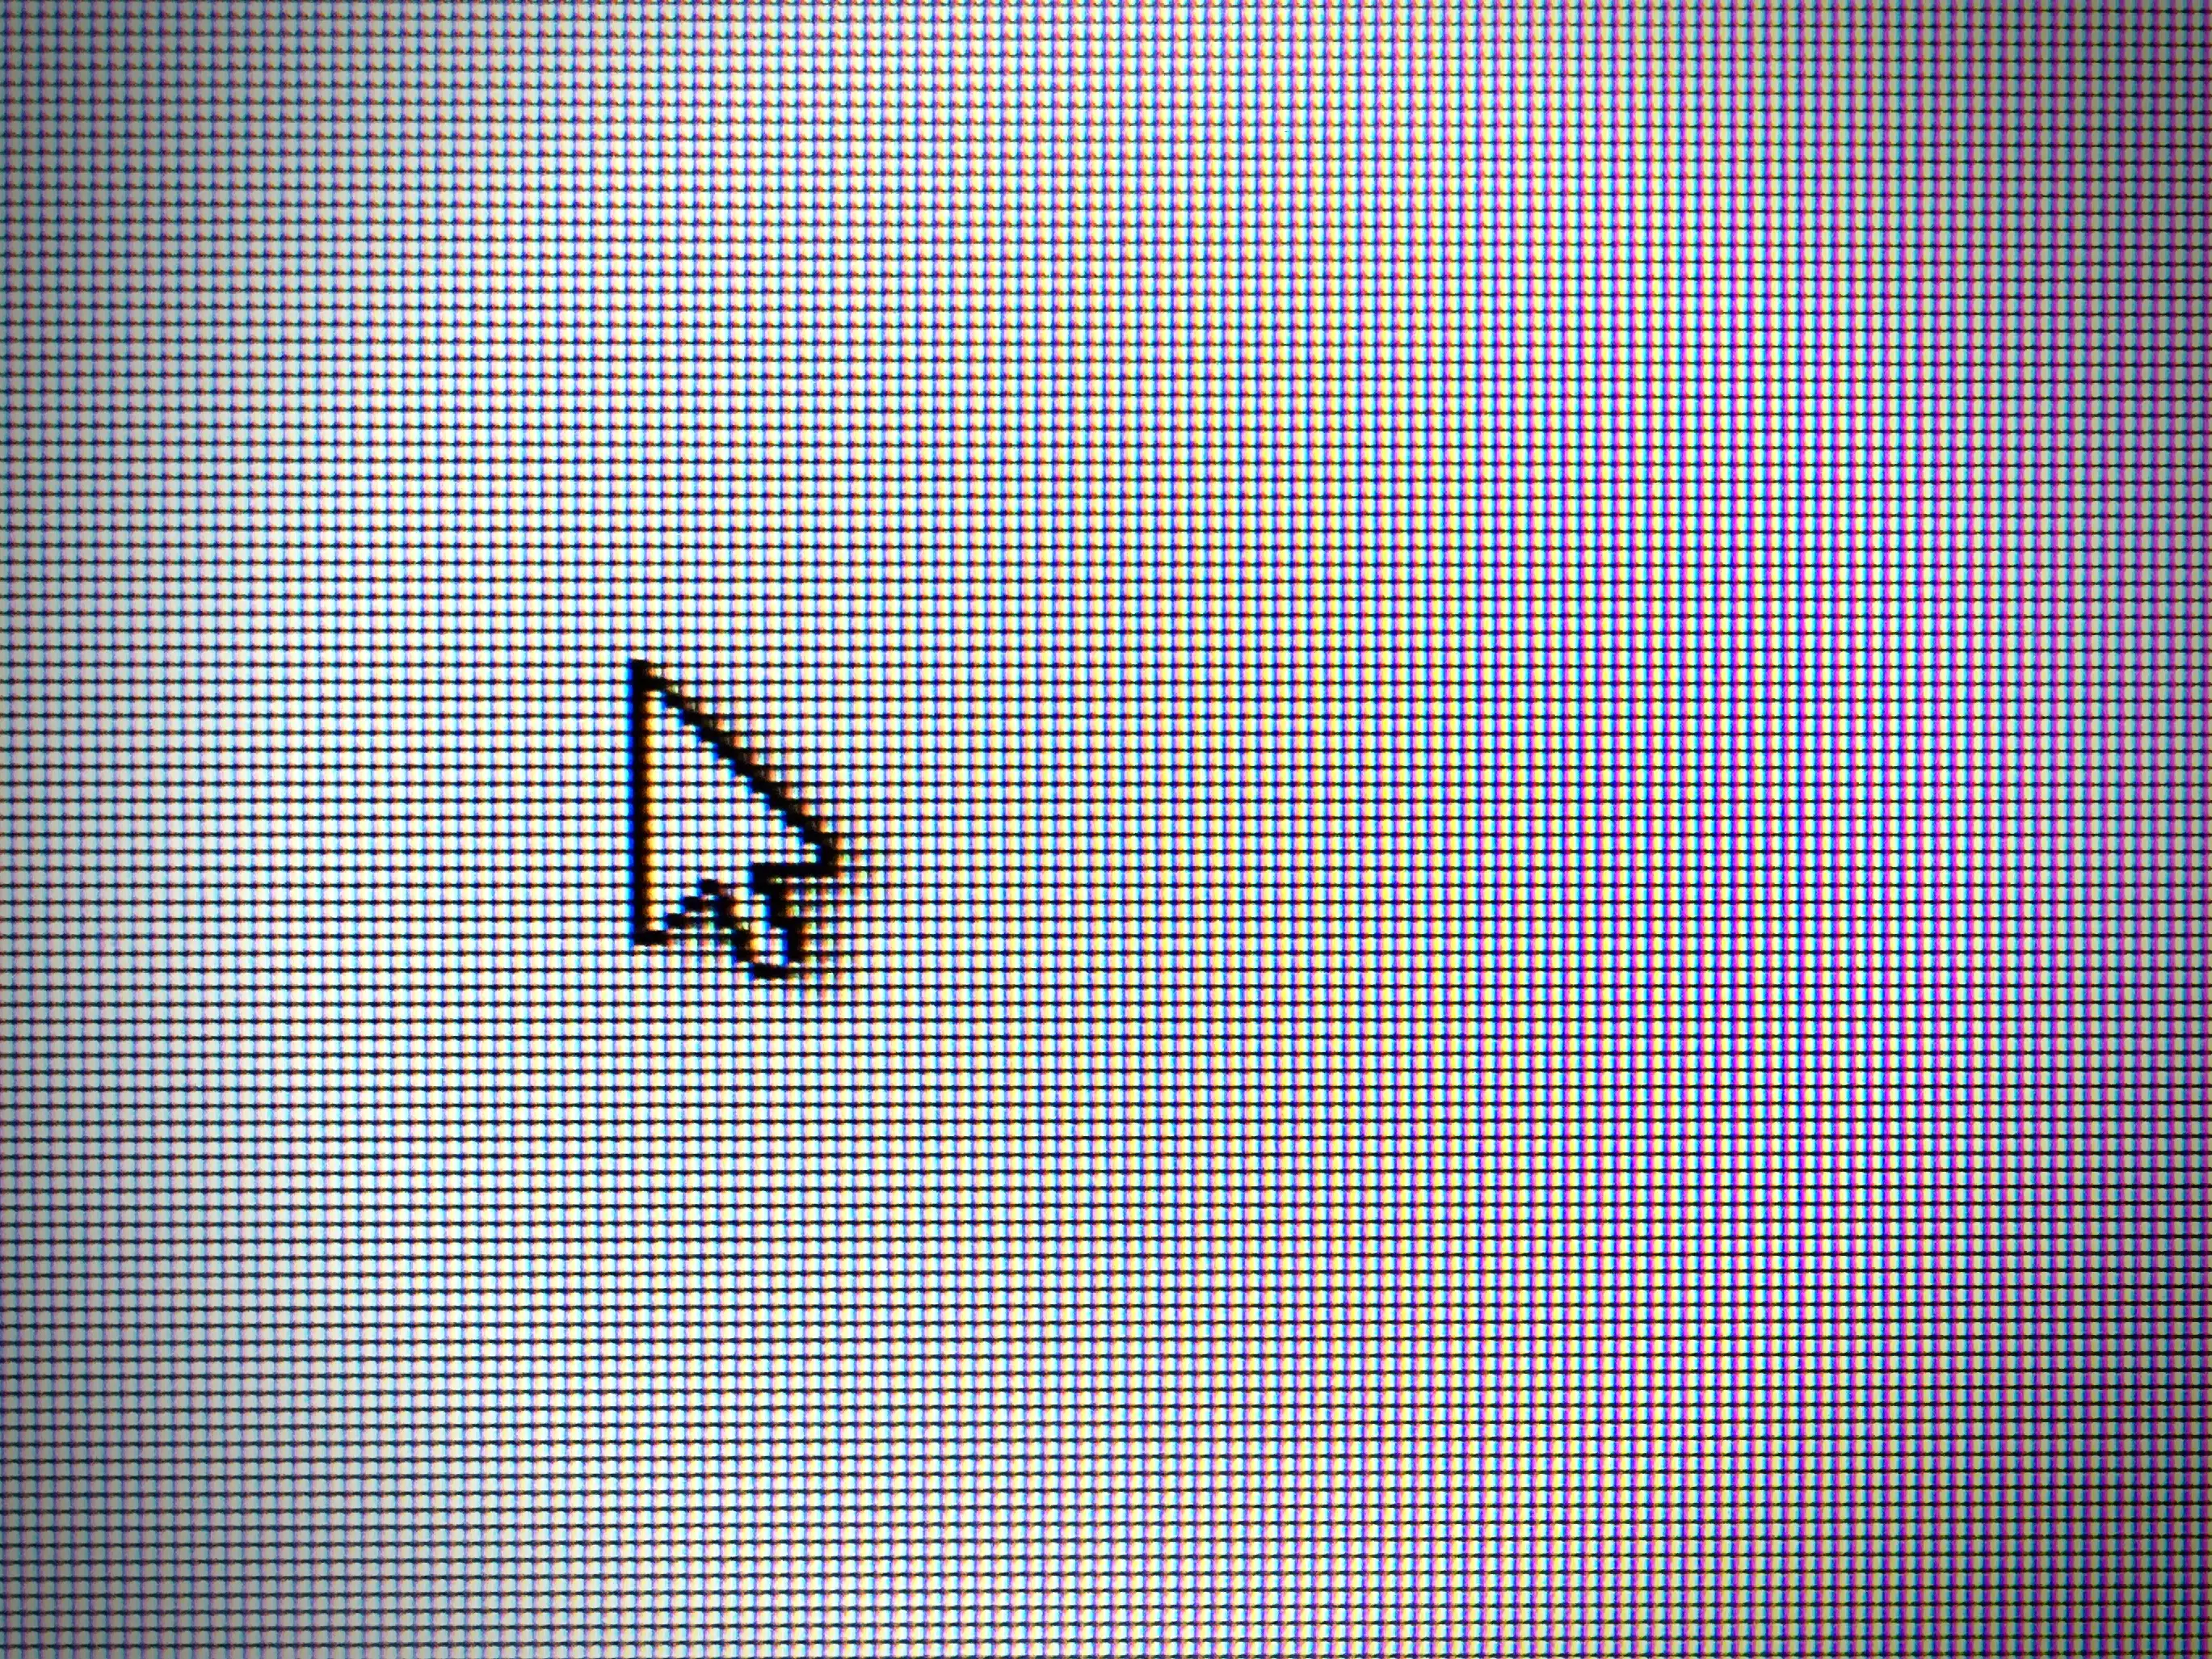 cursor-on-the-screen